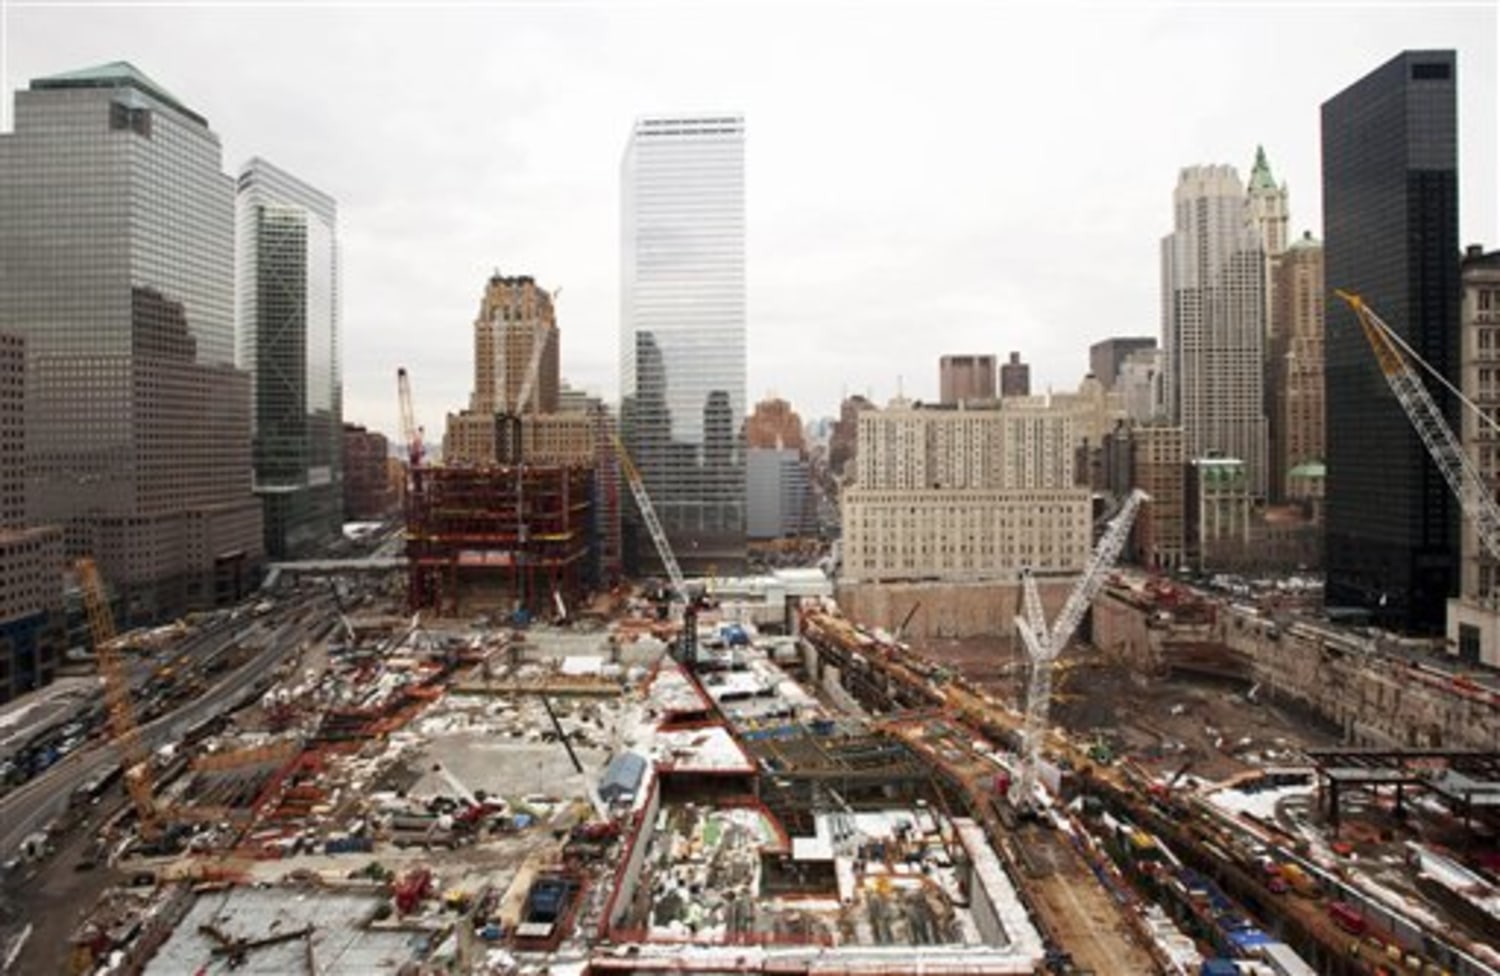 Ground zero hotel wants to attract 9/11 tourists